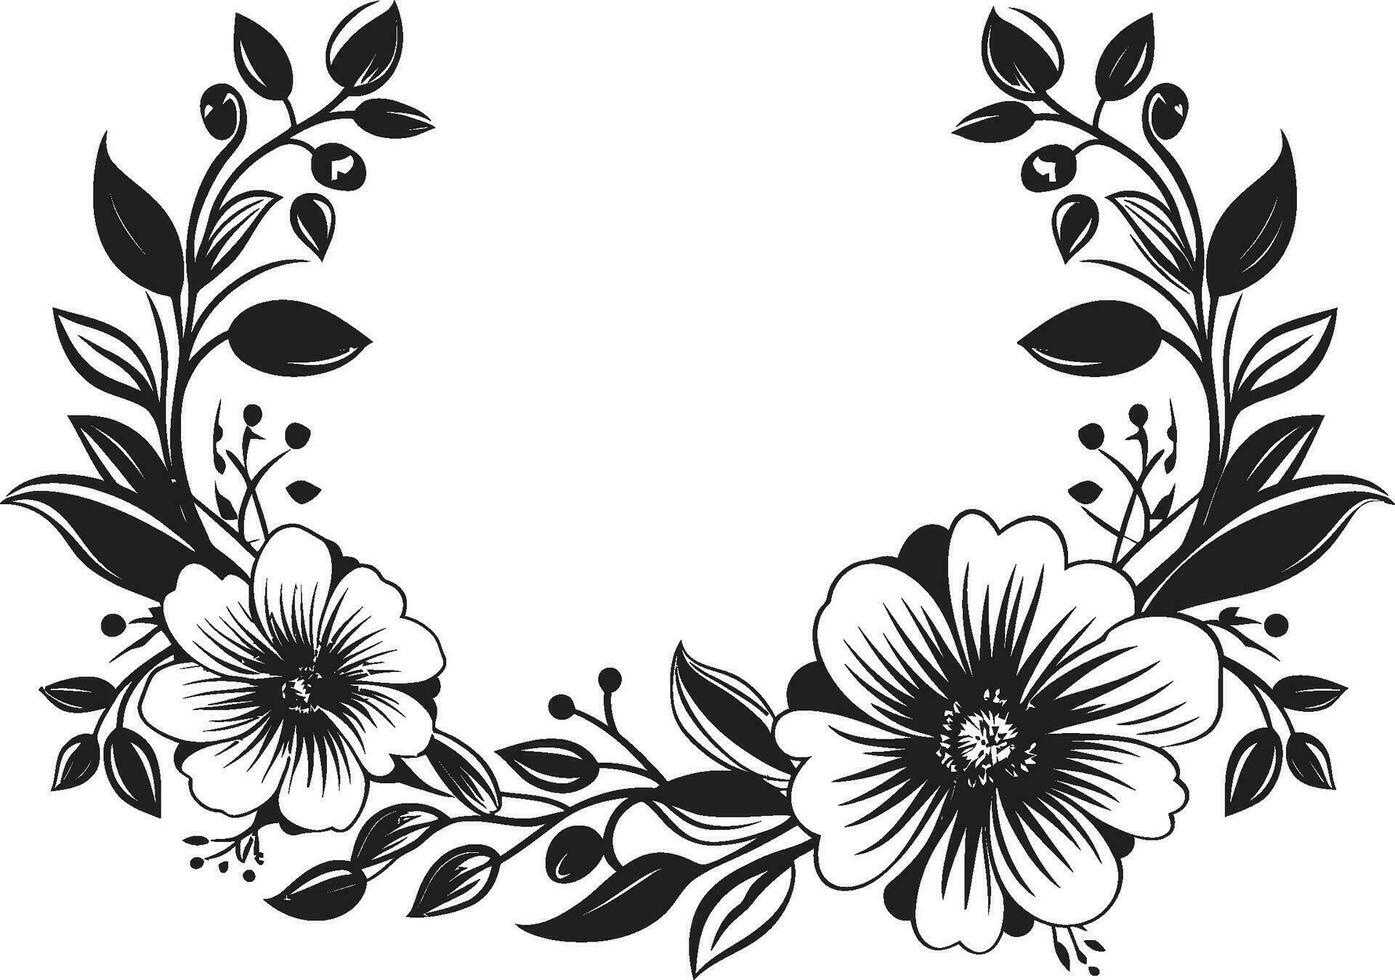 noir botanico sinfonia mano disegnato floreale arte grafite fioritura insieme noir logo schizzi vettore